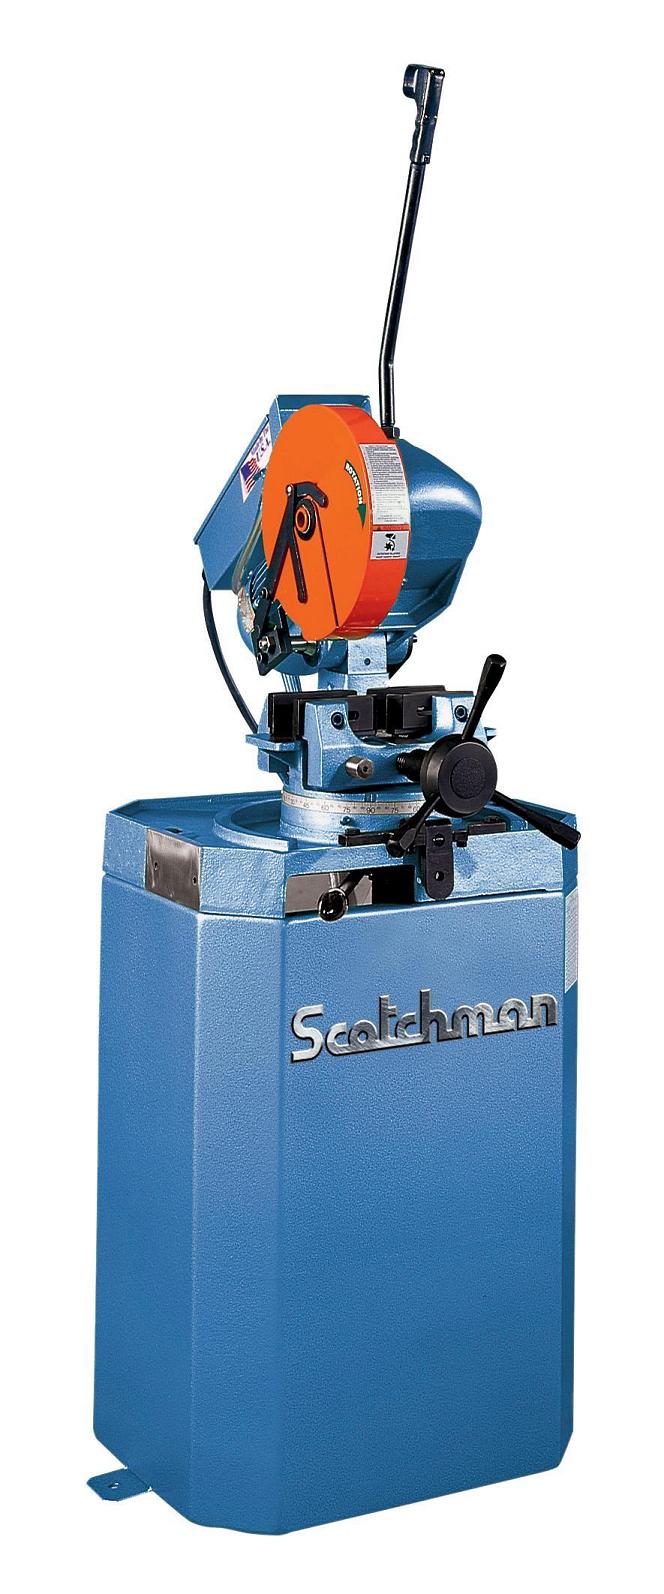 Scotchman CPO 350 PK Ferrous Cutting  Power Vise Cold Saw